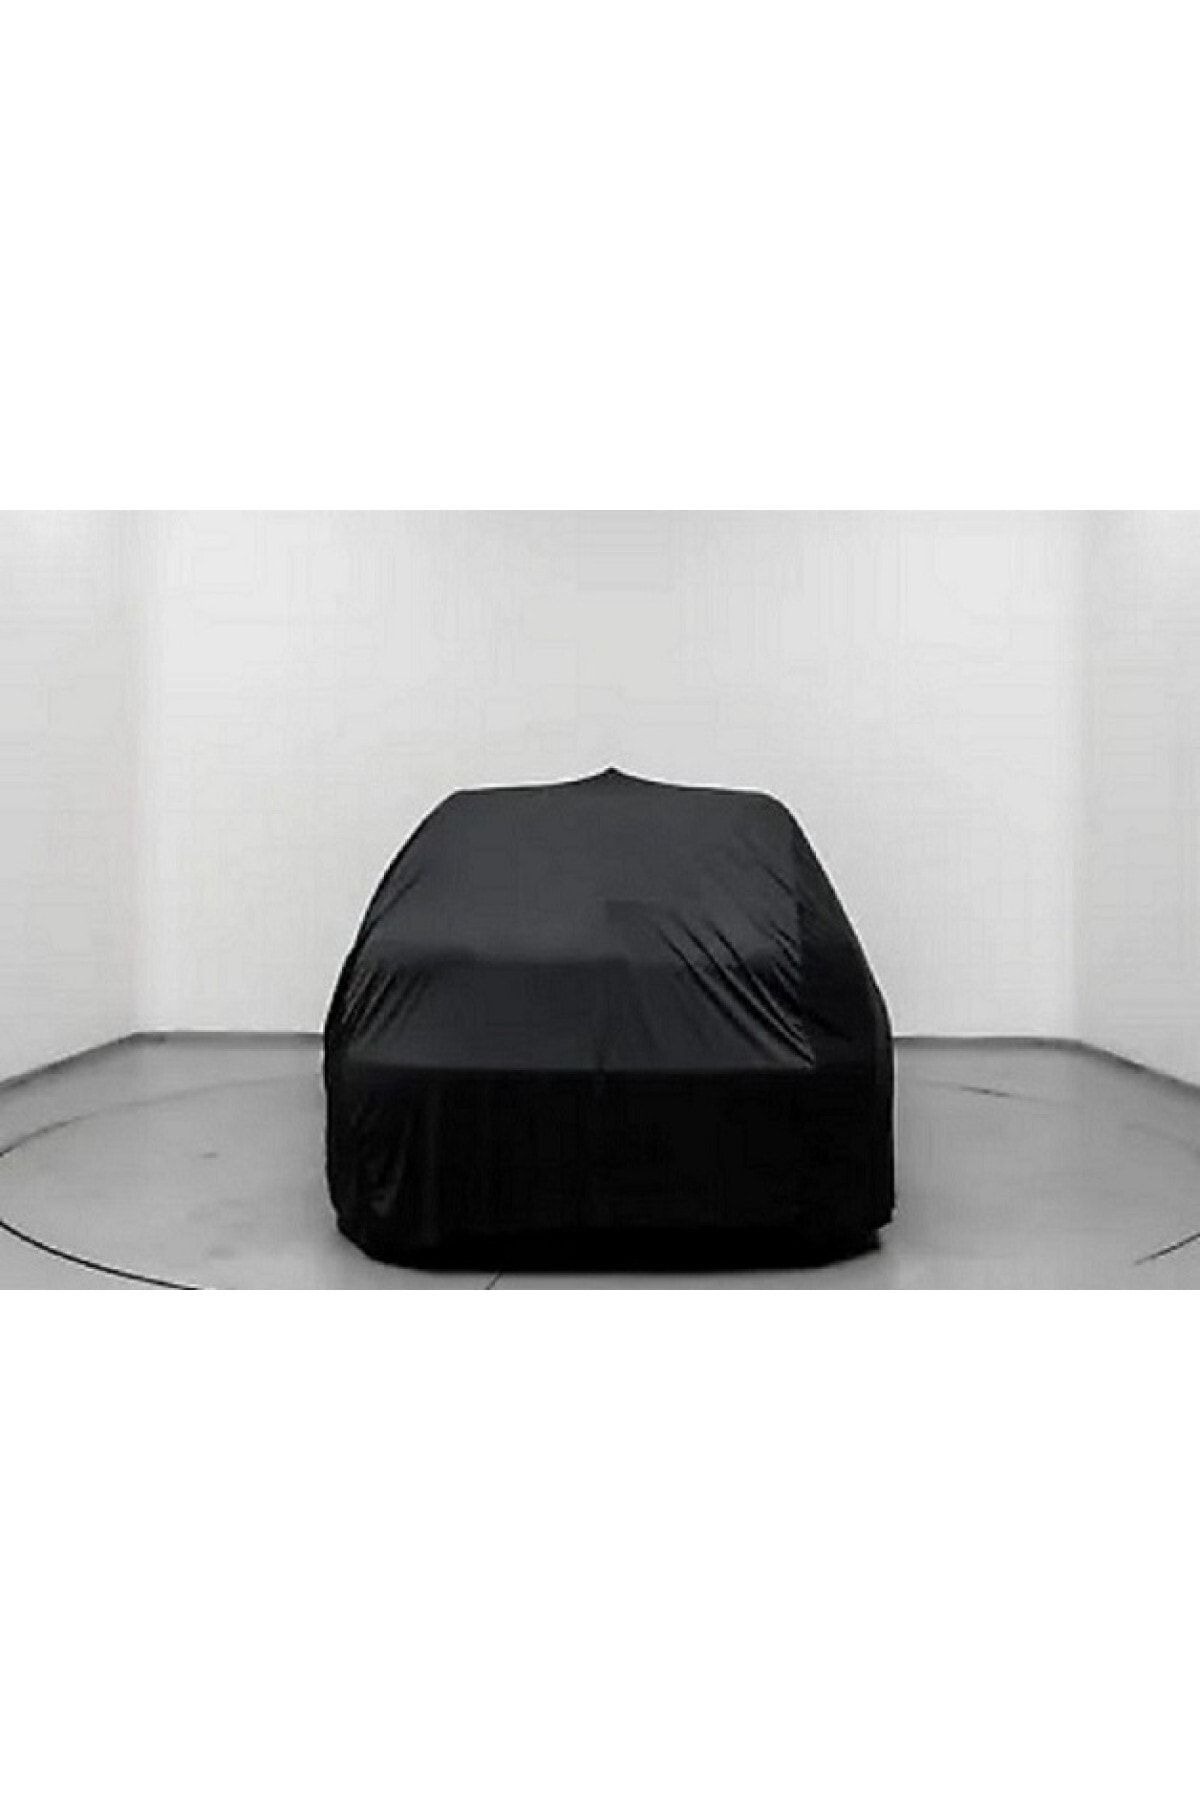 Teksin Nissan 370z Black Automobile Fabric Combed Cotton Car Cover